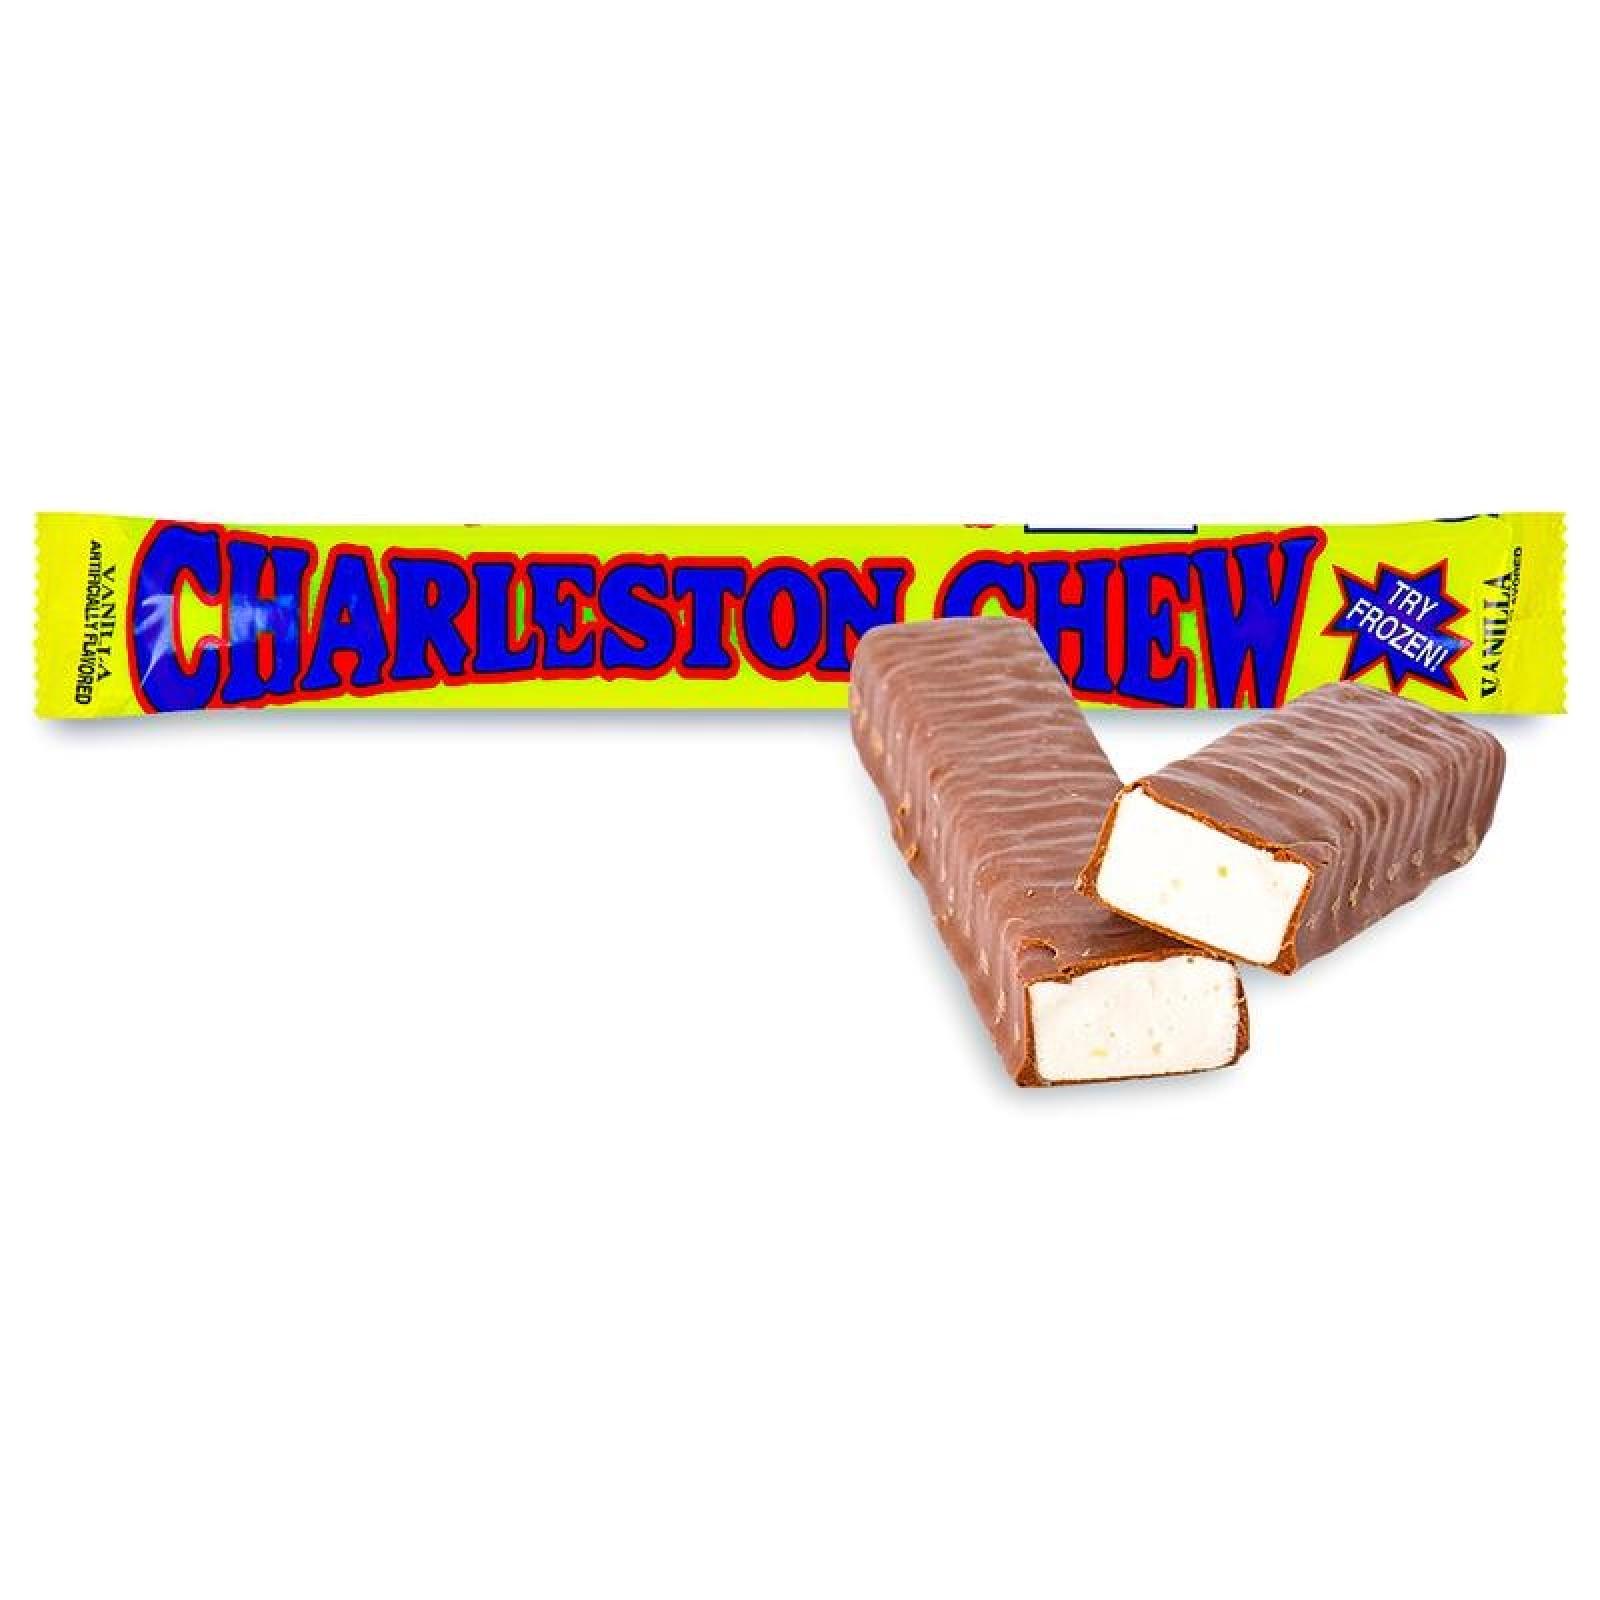 Charleston Chew Big Bar